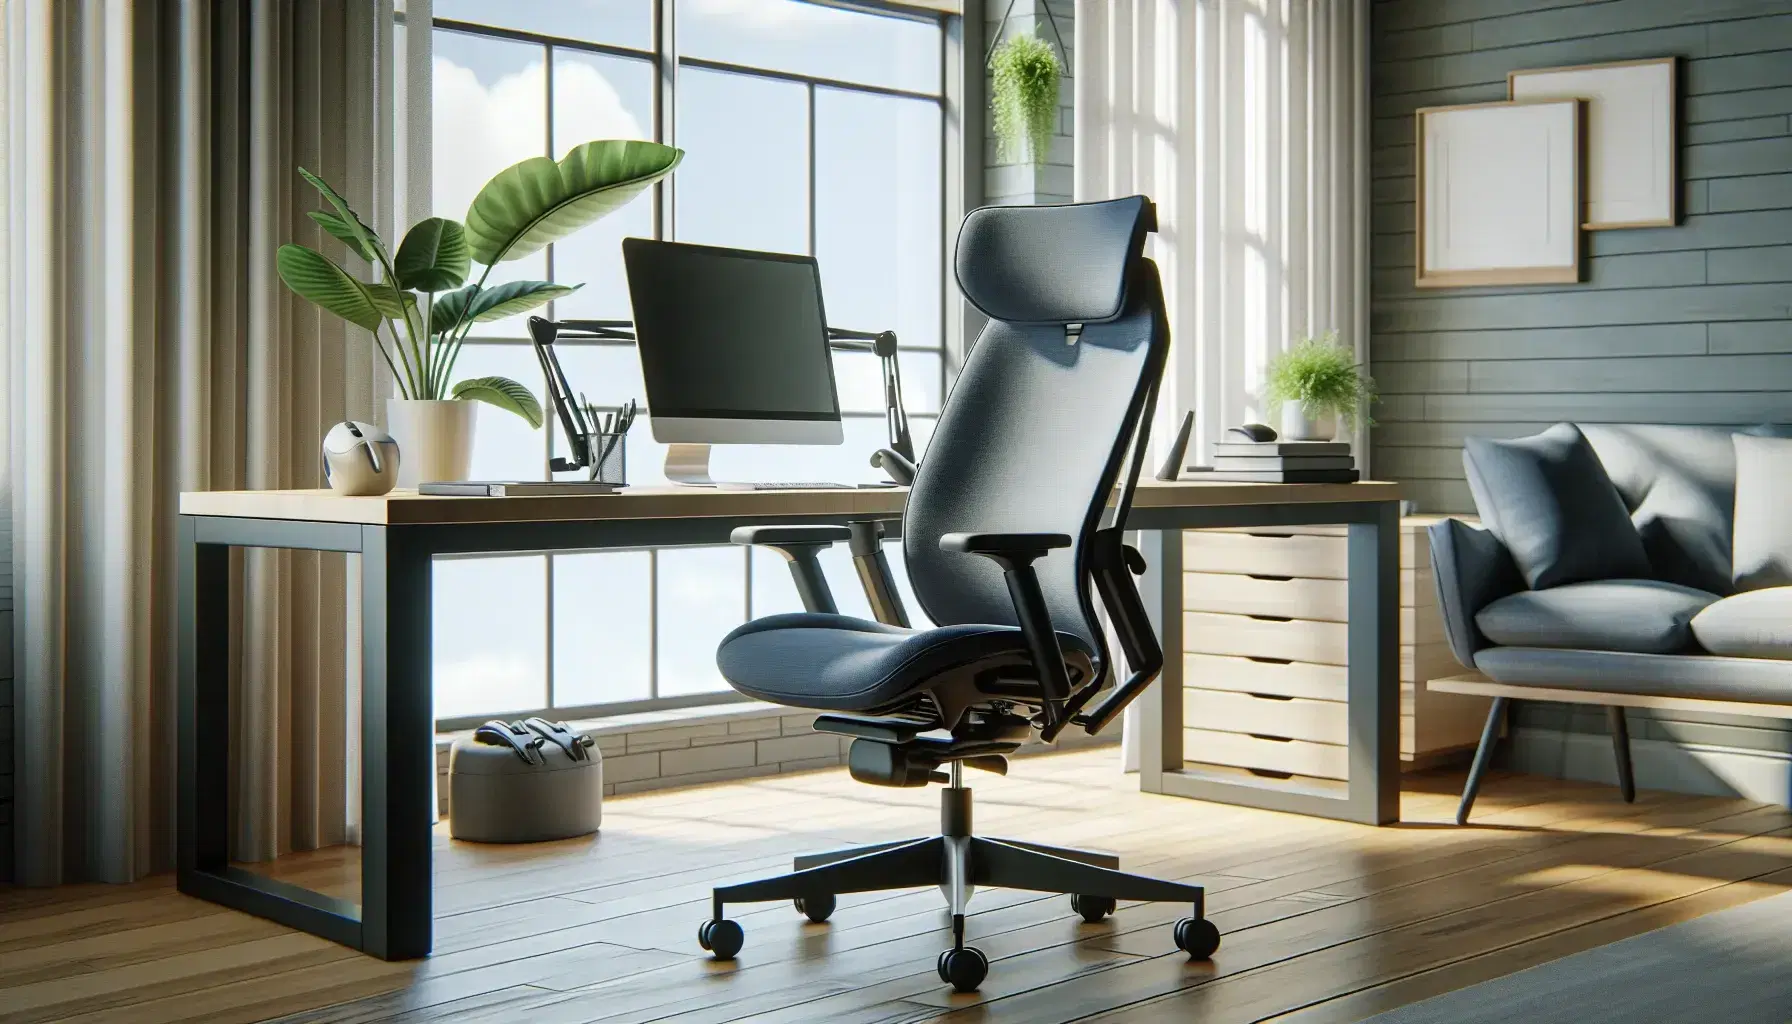 Oficina moderna y luminosa con silla ergonómica azul, escritorio con monitor a nivel de ojos, teclado inalámbrico, ratón ergonómico y planta verde, junto a ventana grande.